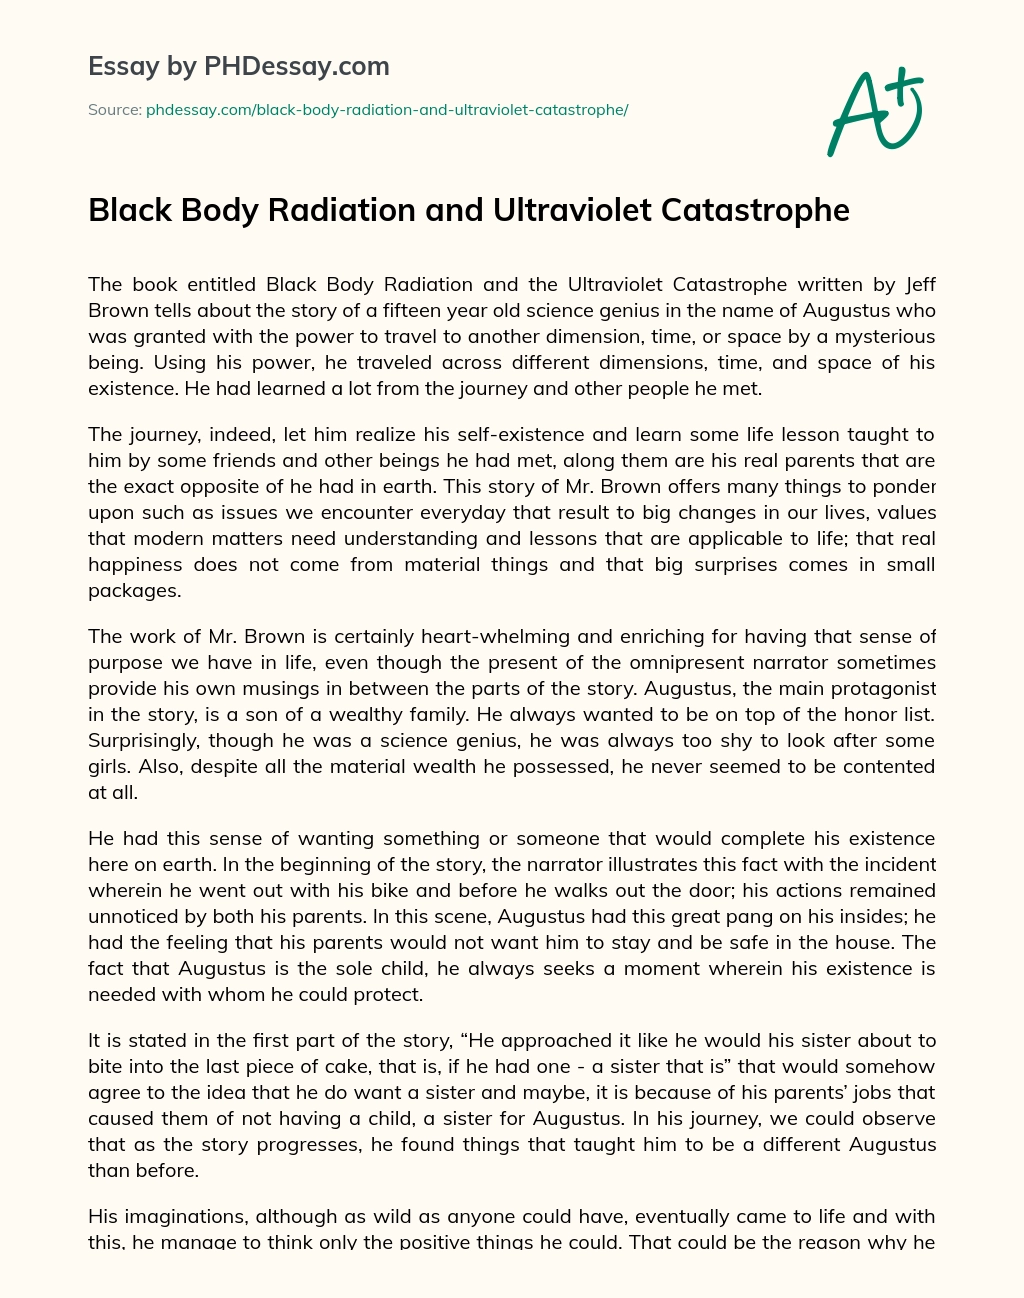 Black Body Radiation and Ultraviolet Catastrophe essay